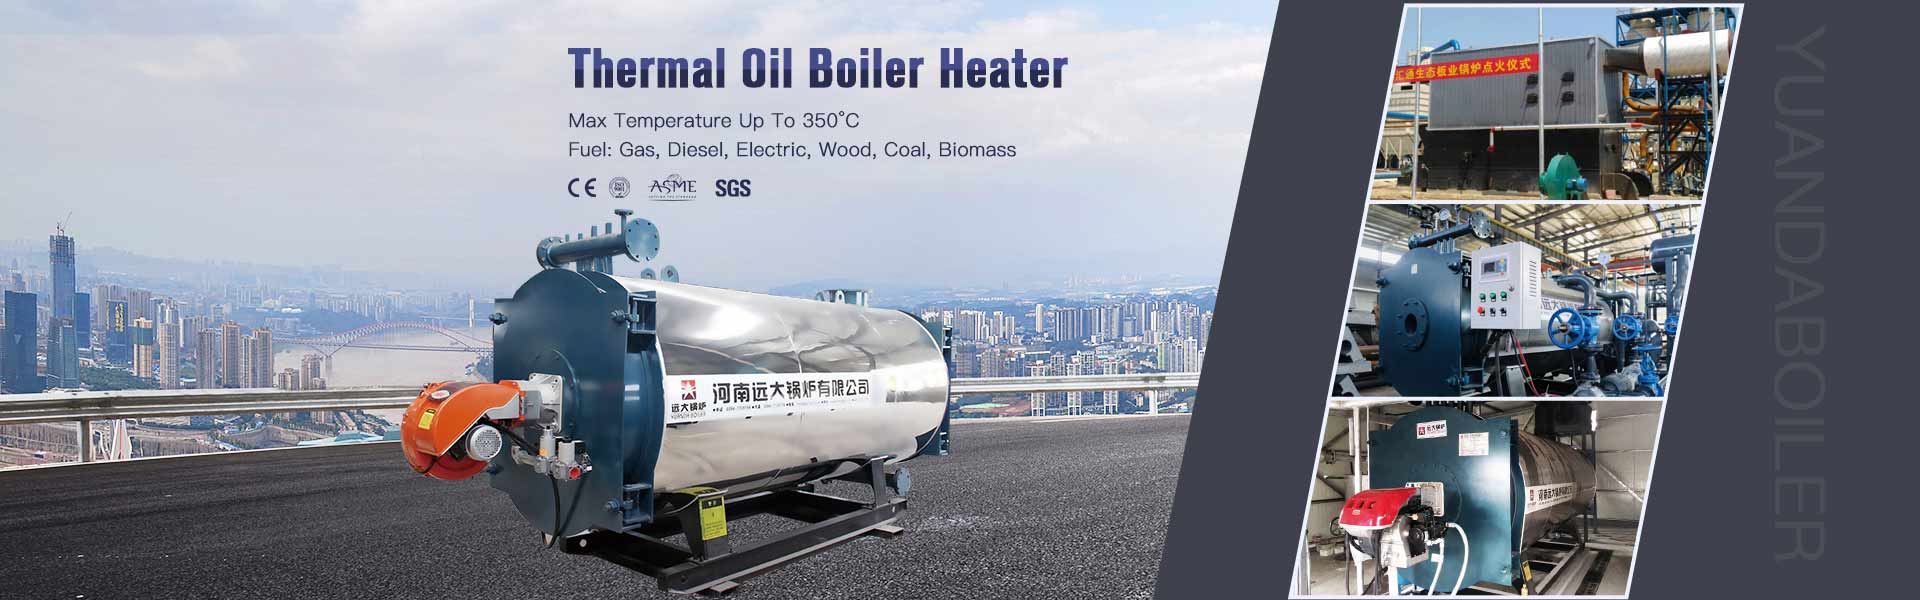 thermal oil boiler heater